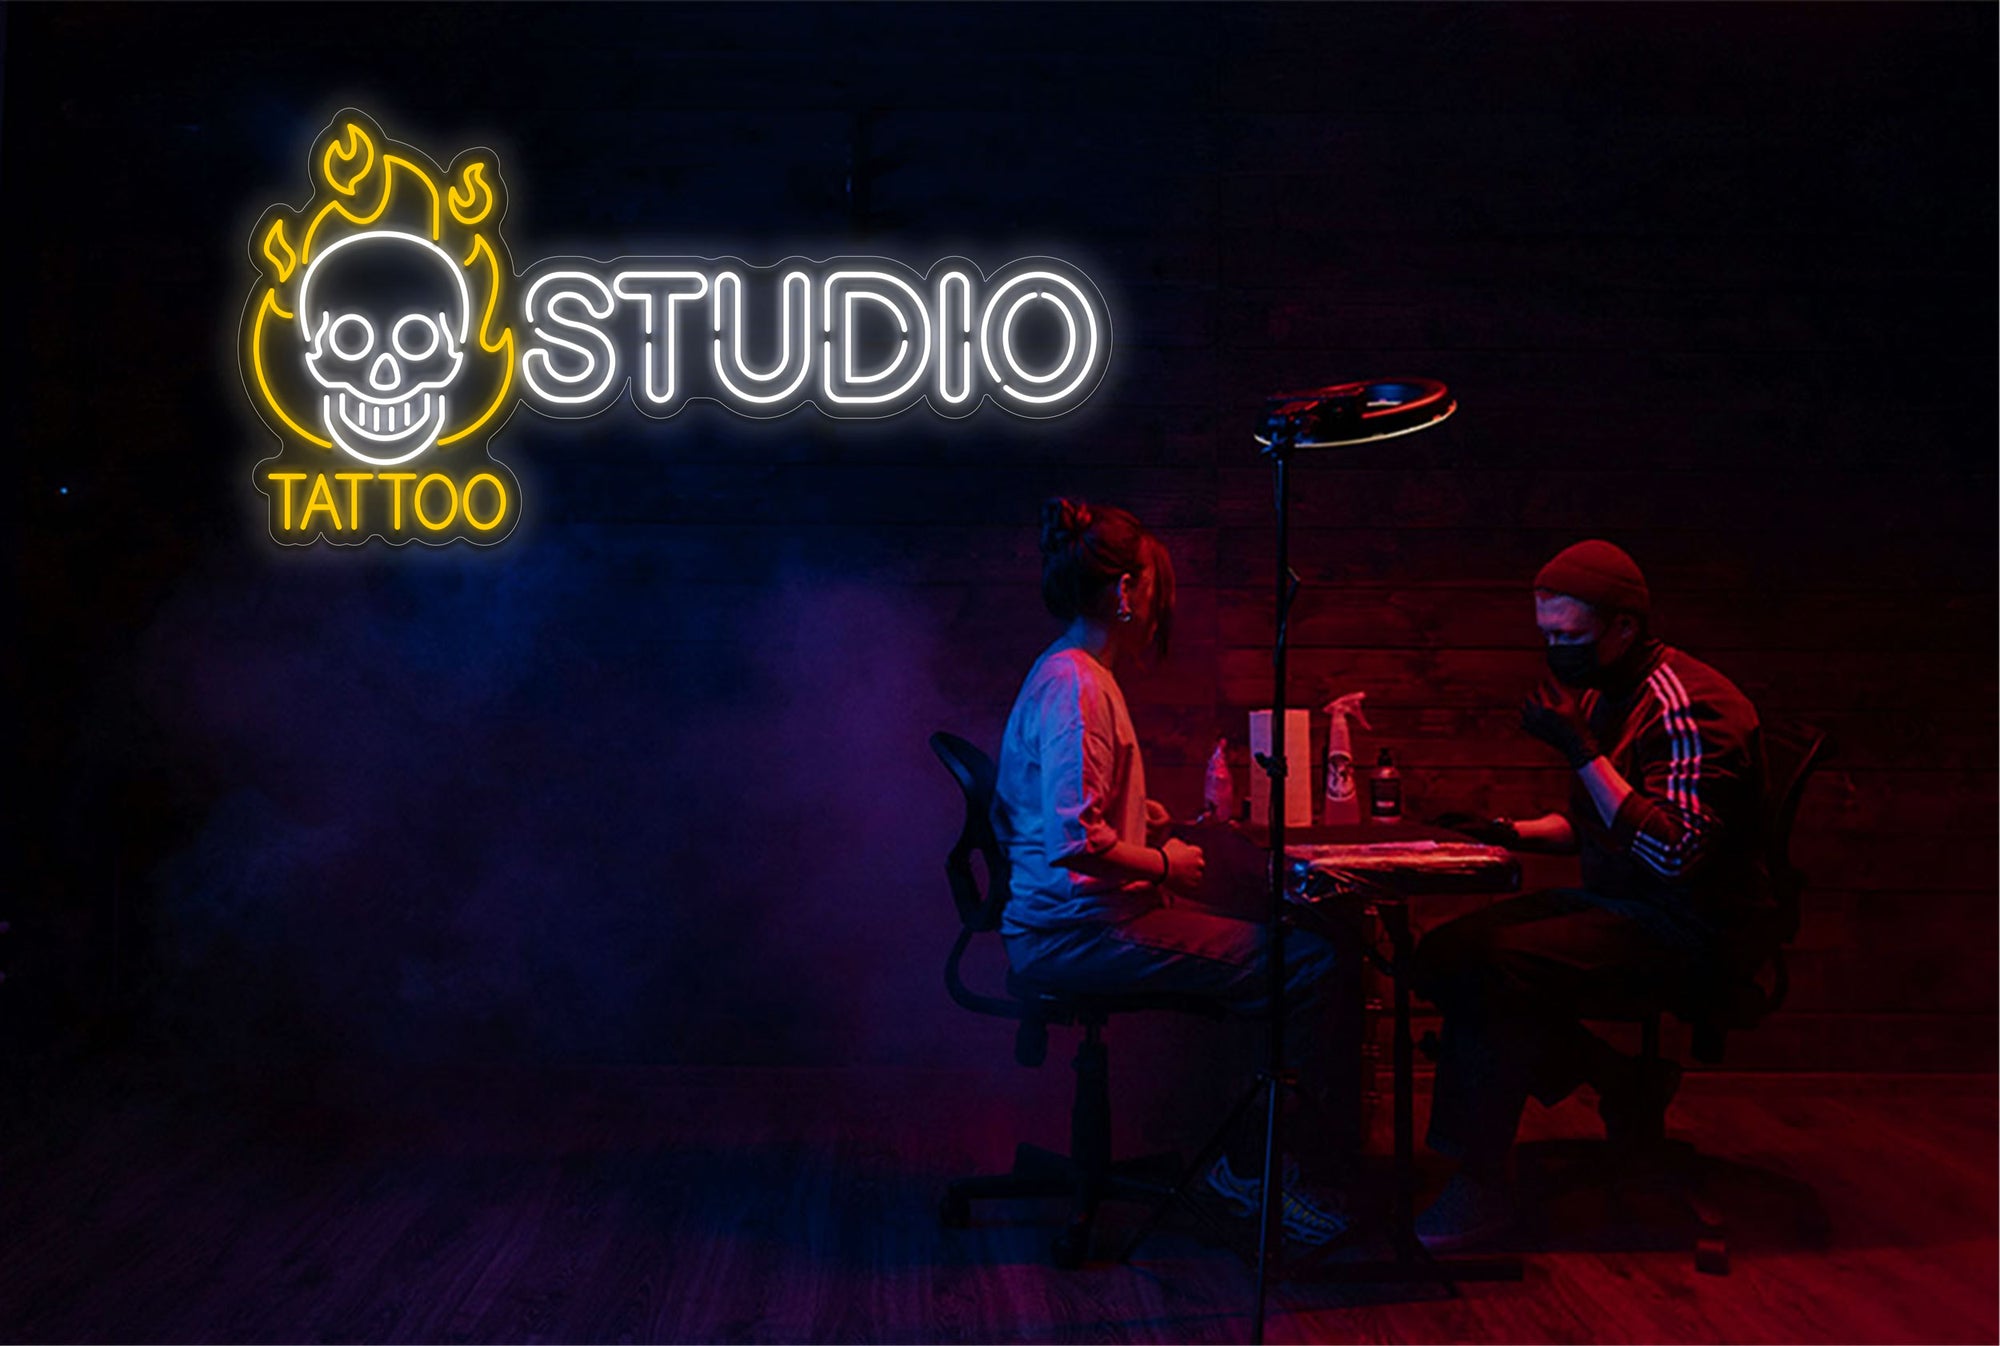 "Tattoo Studio" Skull on Fire LED Neon Sign